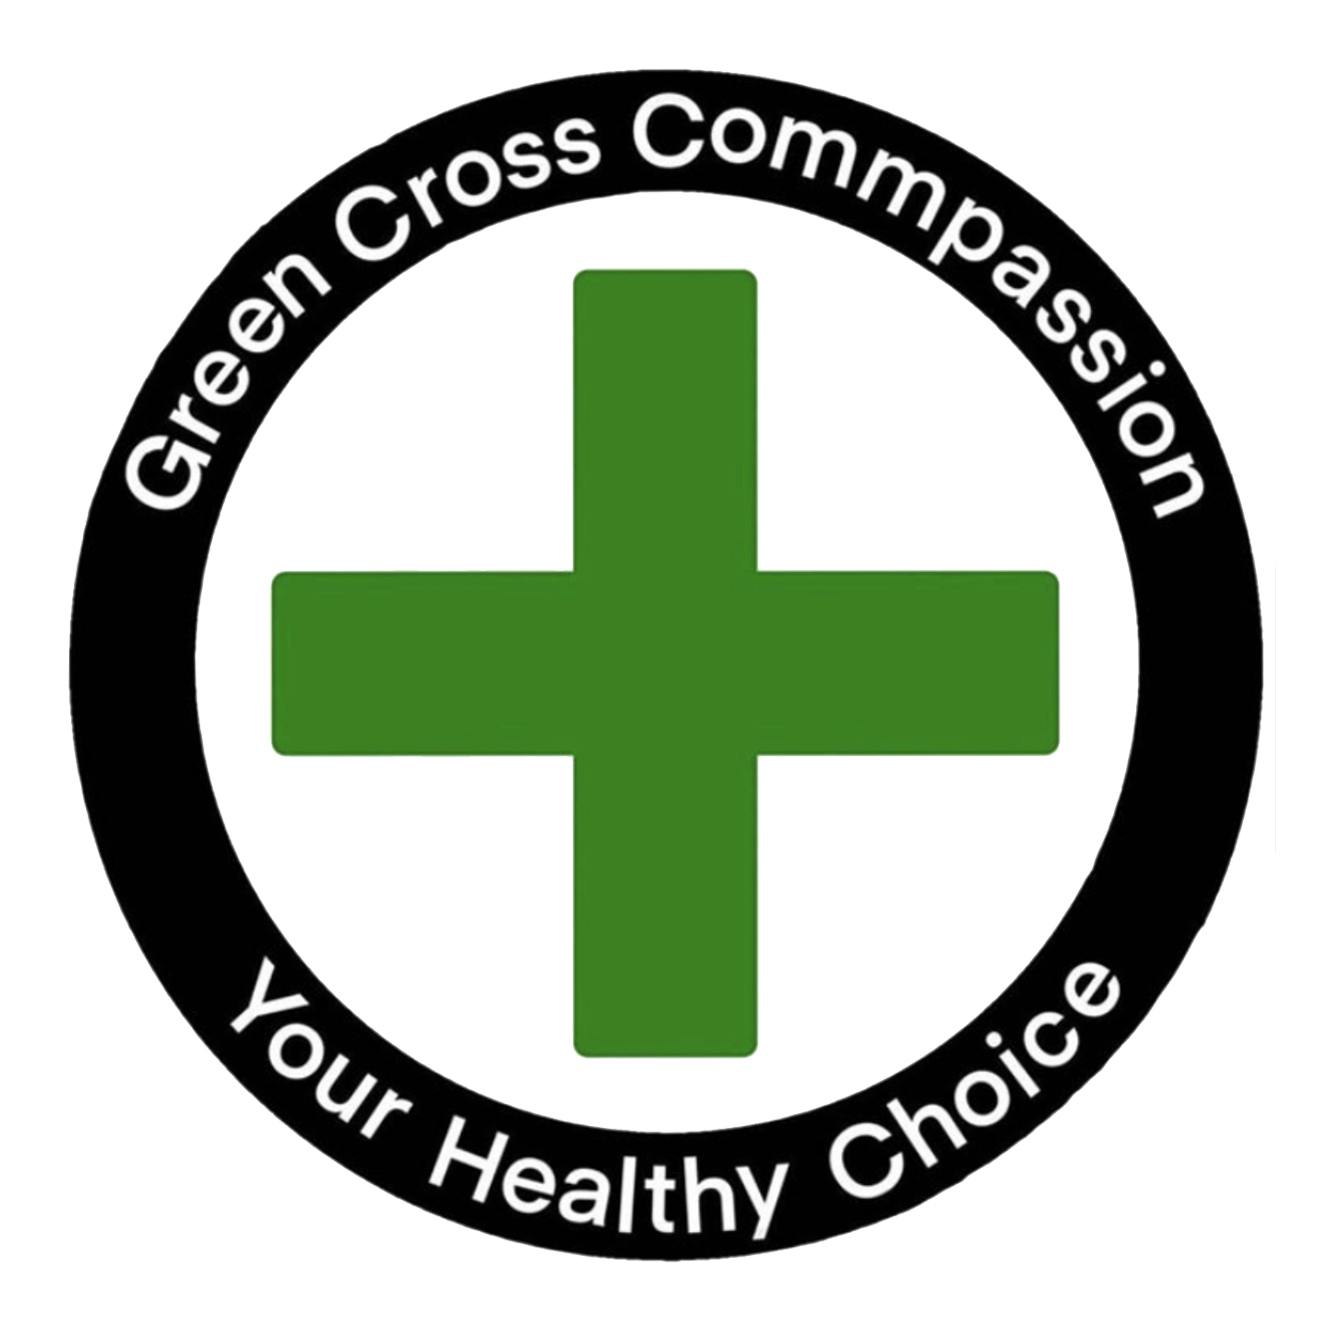 GreenCrossCommpassion logo